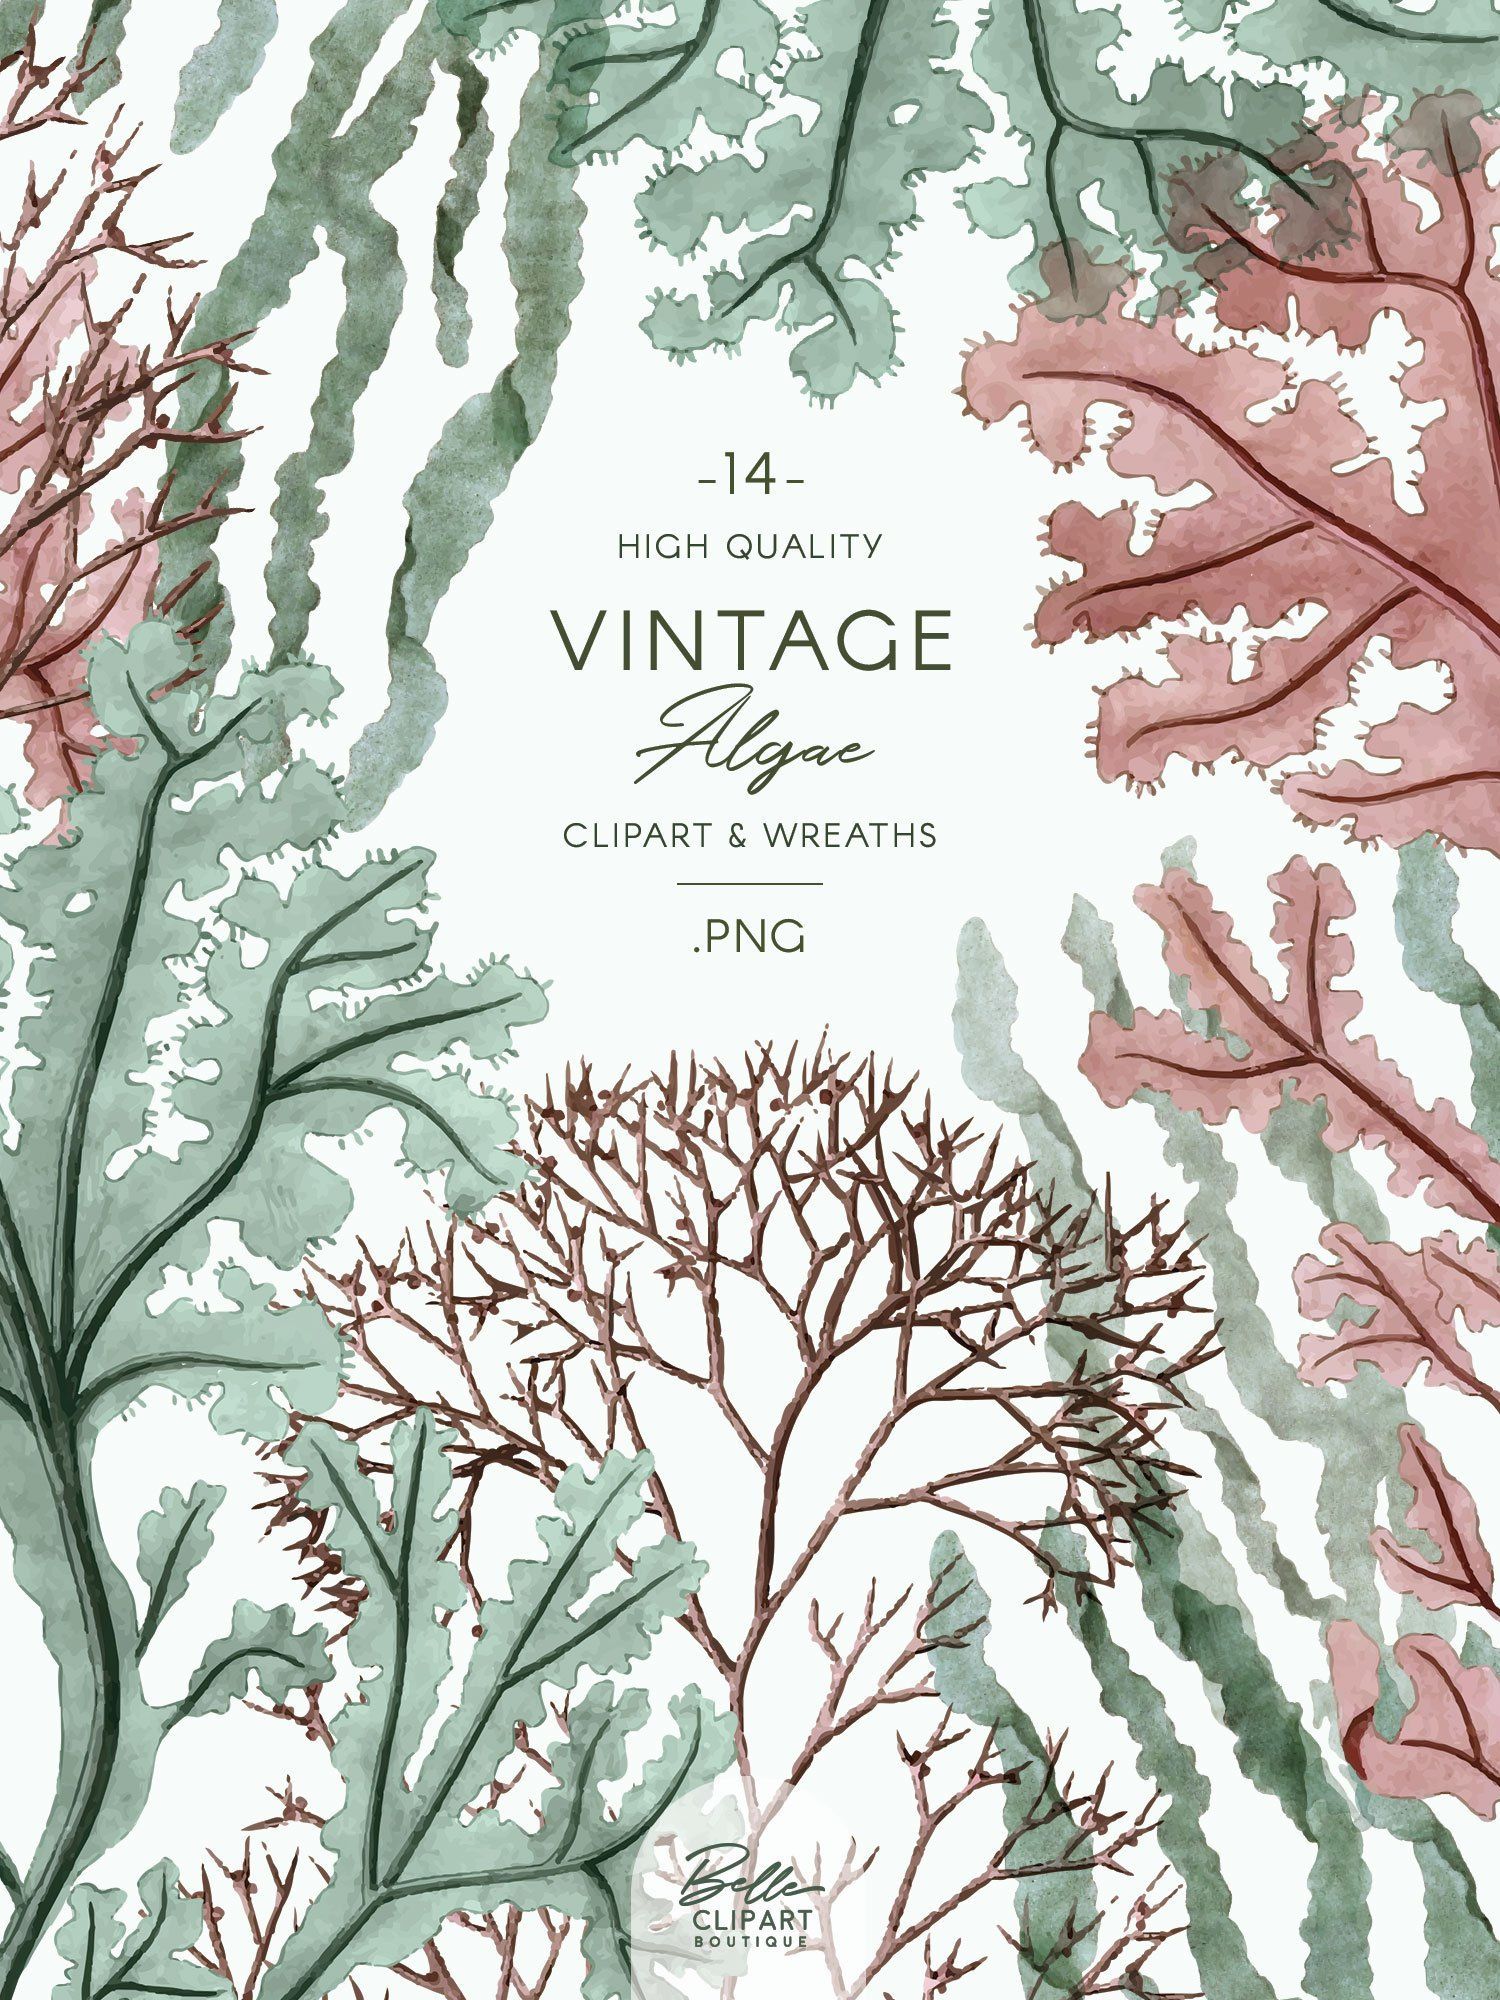 Vintage Algae clip art, watercolor Seaweed illustrations.